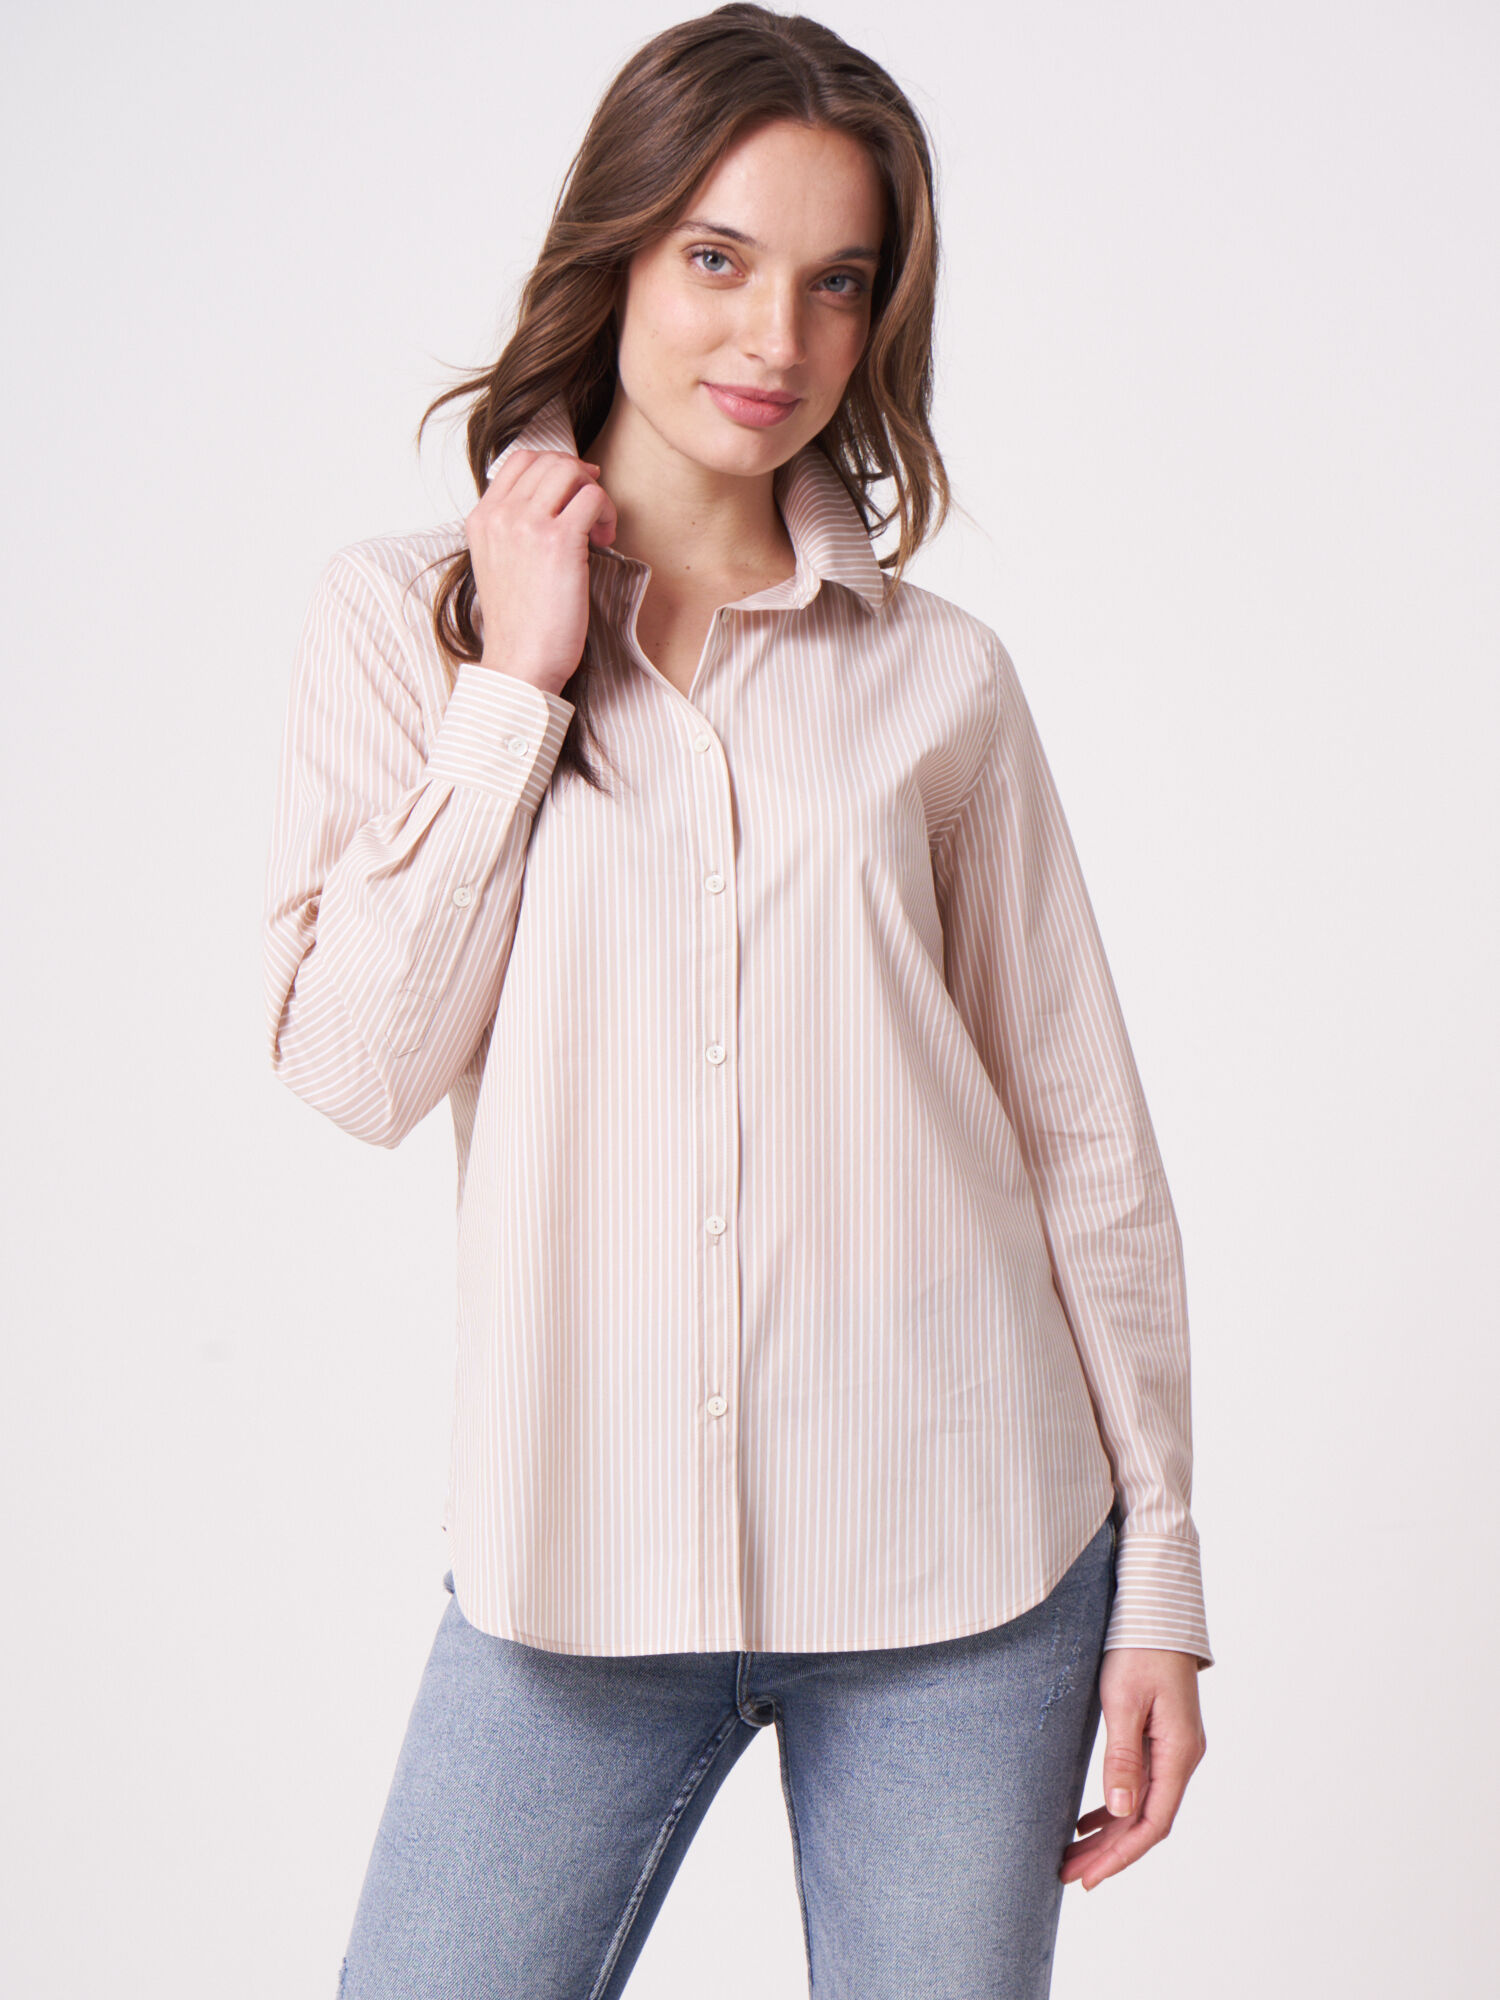 discount 74% Rialbanni Golden/White L blouse WOMEN FASHION Shirts & T-shirts Blouse Flowing 